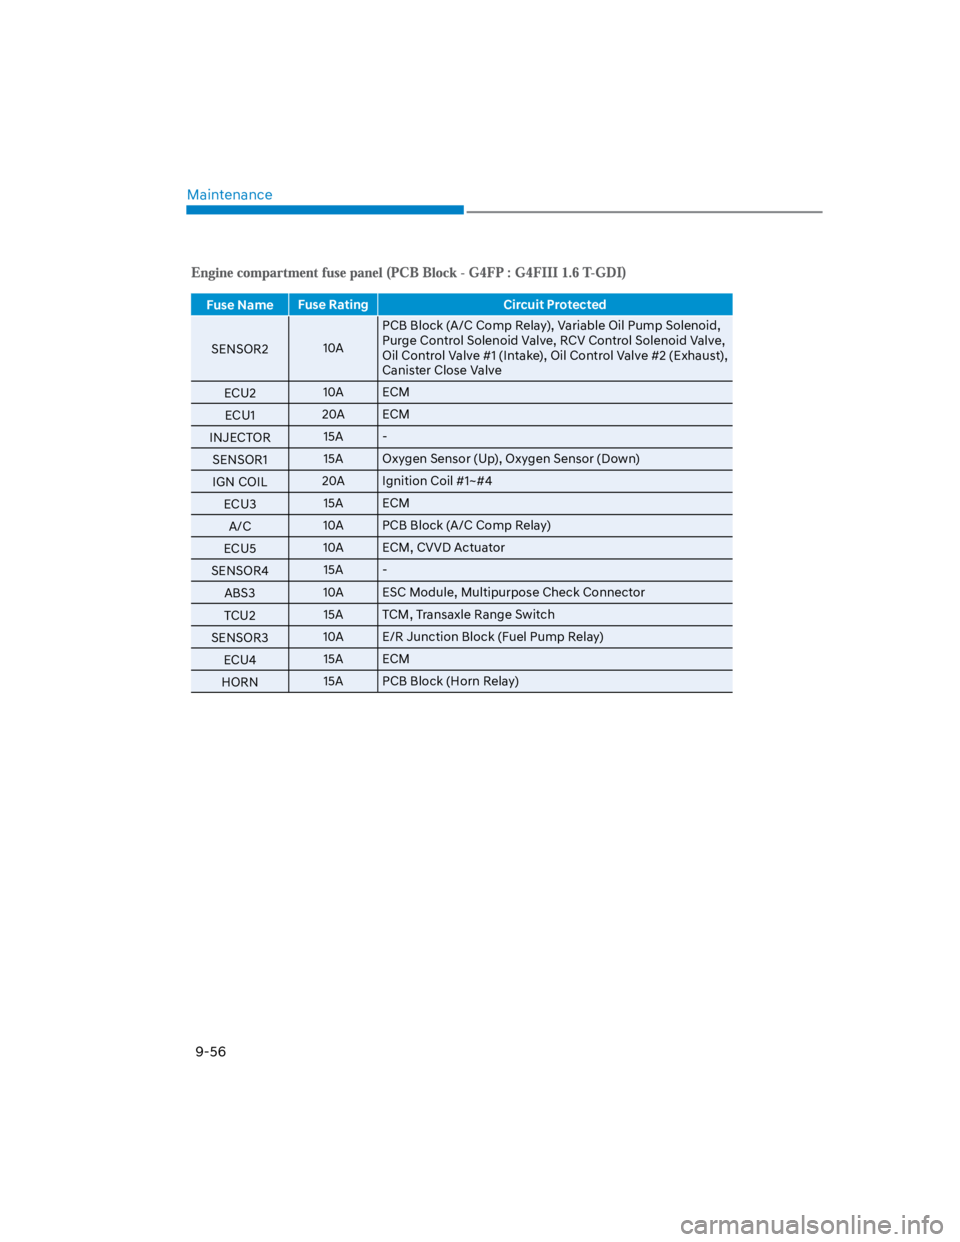 HYUNDAI KONA 2022  Owners Manual Maintenance
9-56
Fuse NameFuse Rating Circuit Protected
SENSOR210A
PCB Block (A/C Comp Relay), Variable Oil Pump Solenoid, 
Purge Control Solenoid Valve, RCV Control Solenoid Valve,
Oil Control Valve 